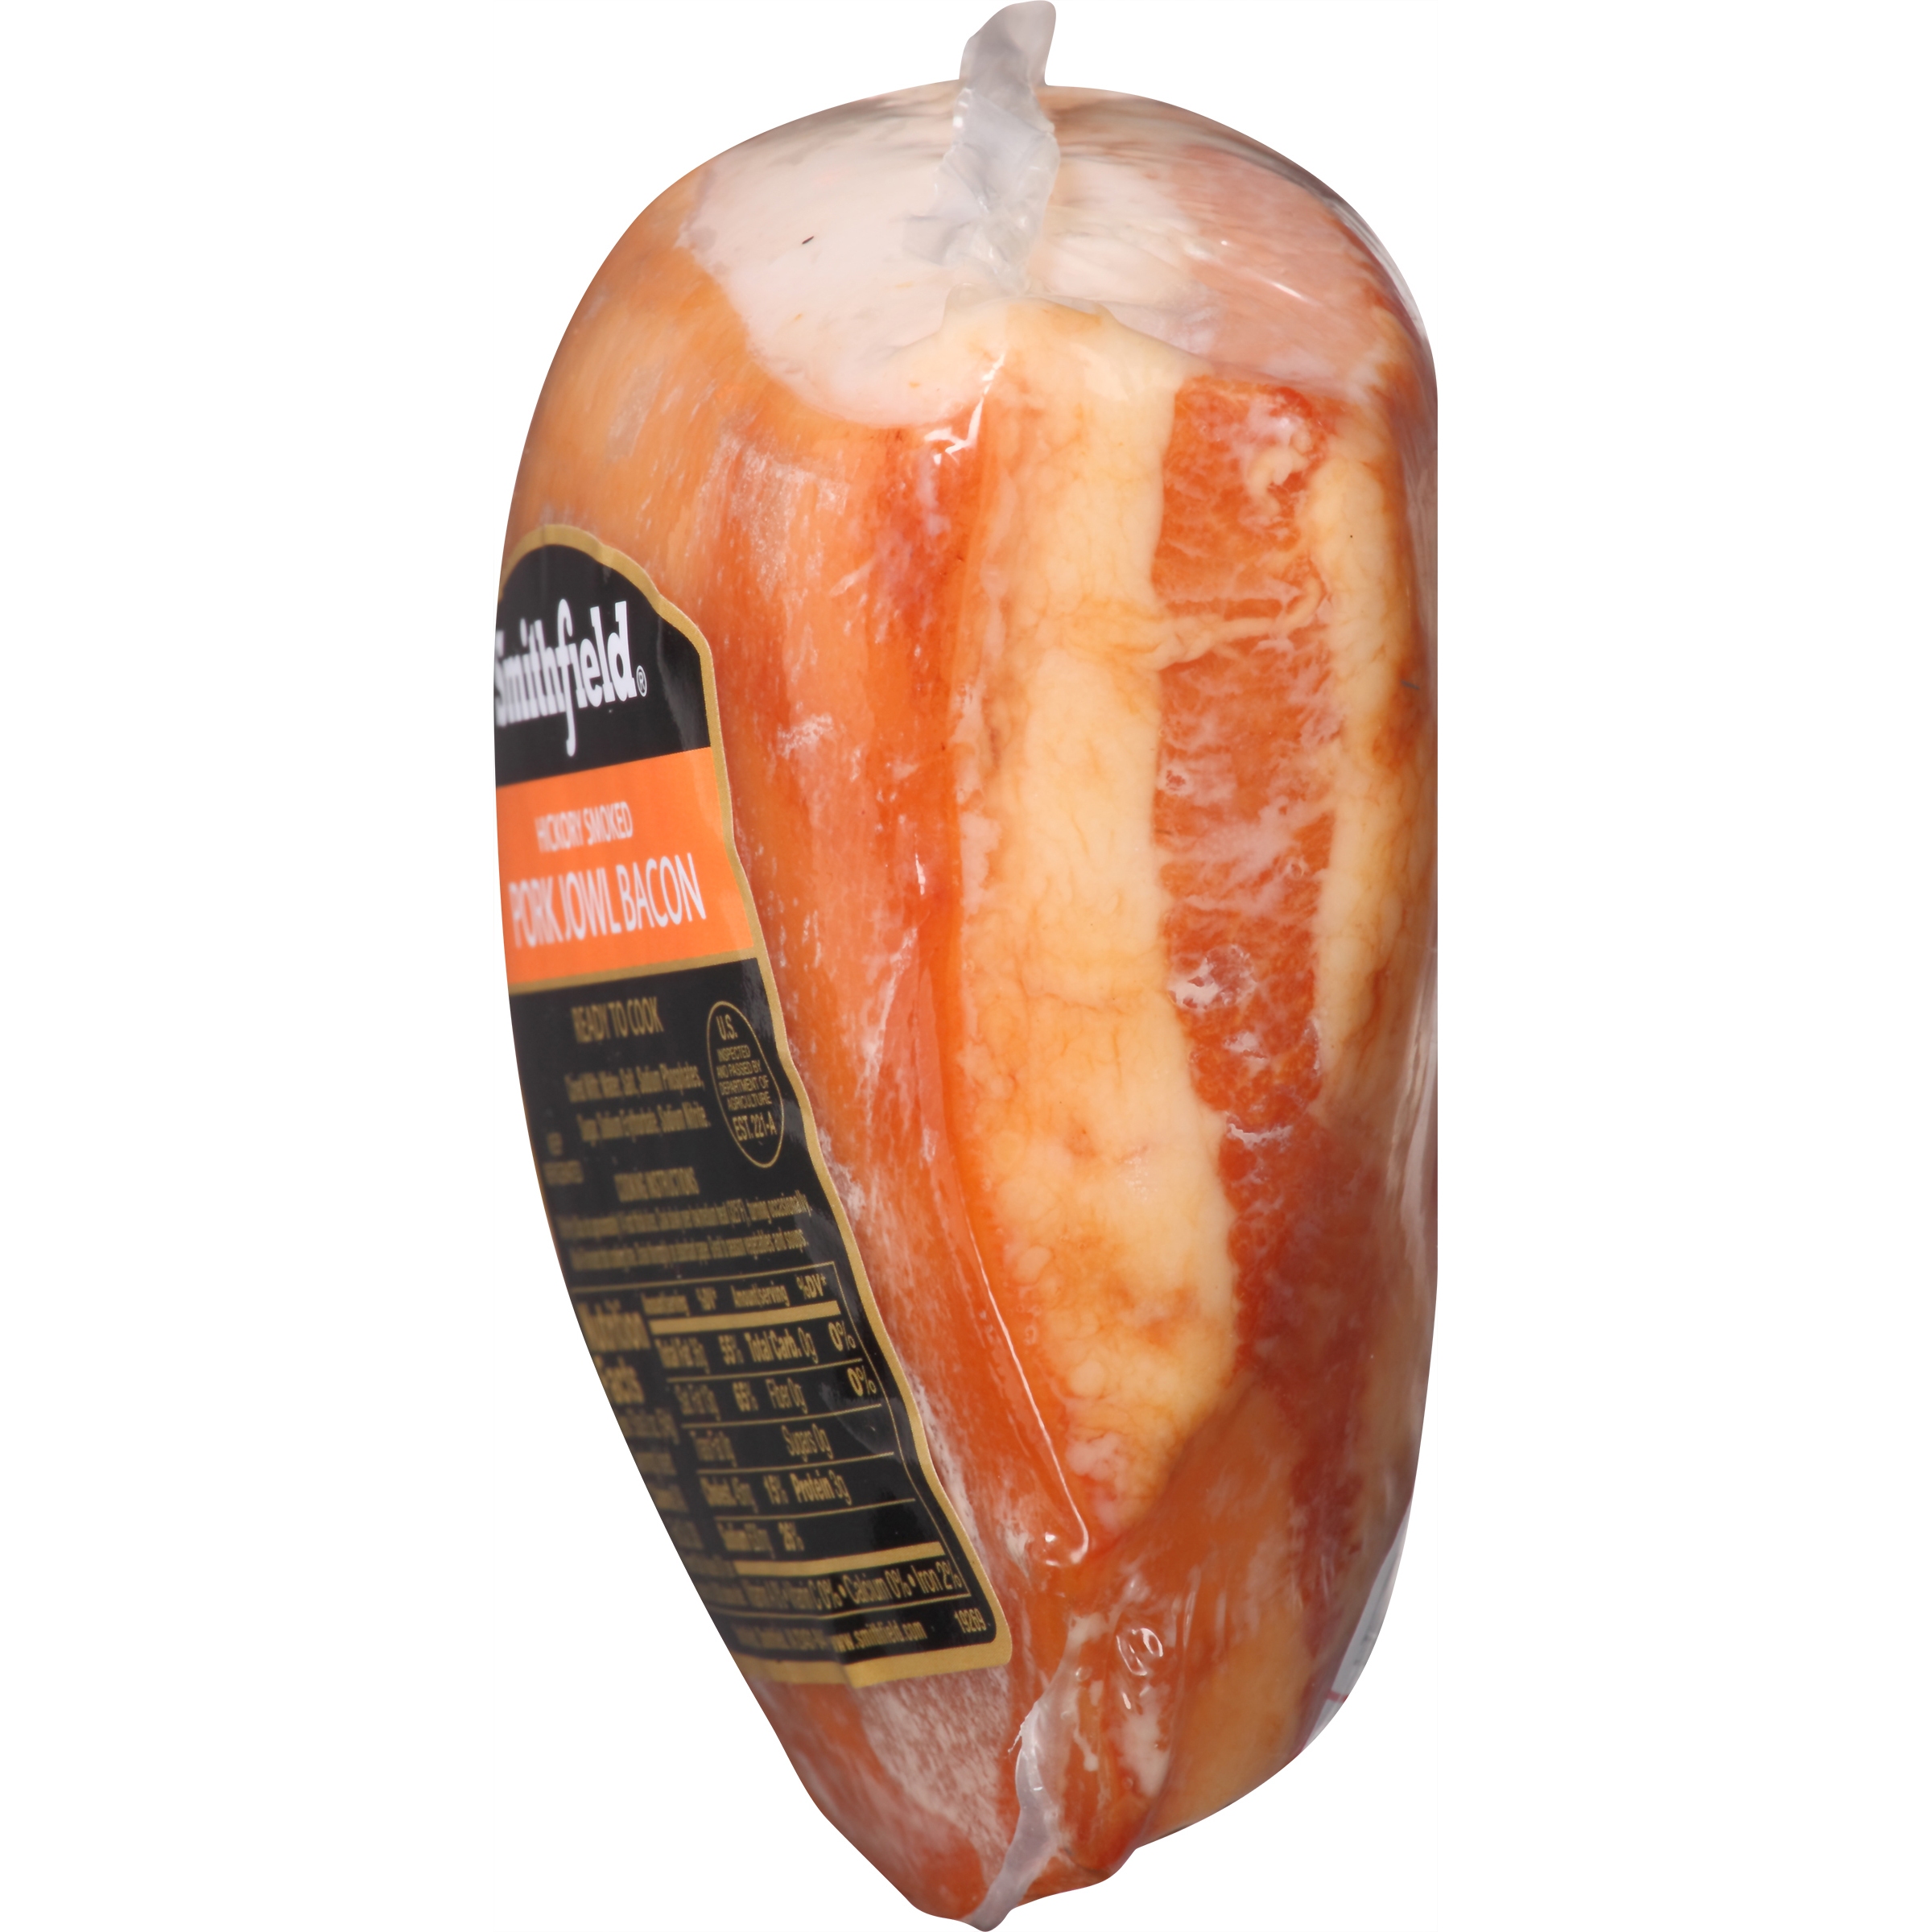 Smithfield Sliced Hickory Smoked Pork Jowl Bacon, 1 - 1.5 lbs - Walmart.com